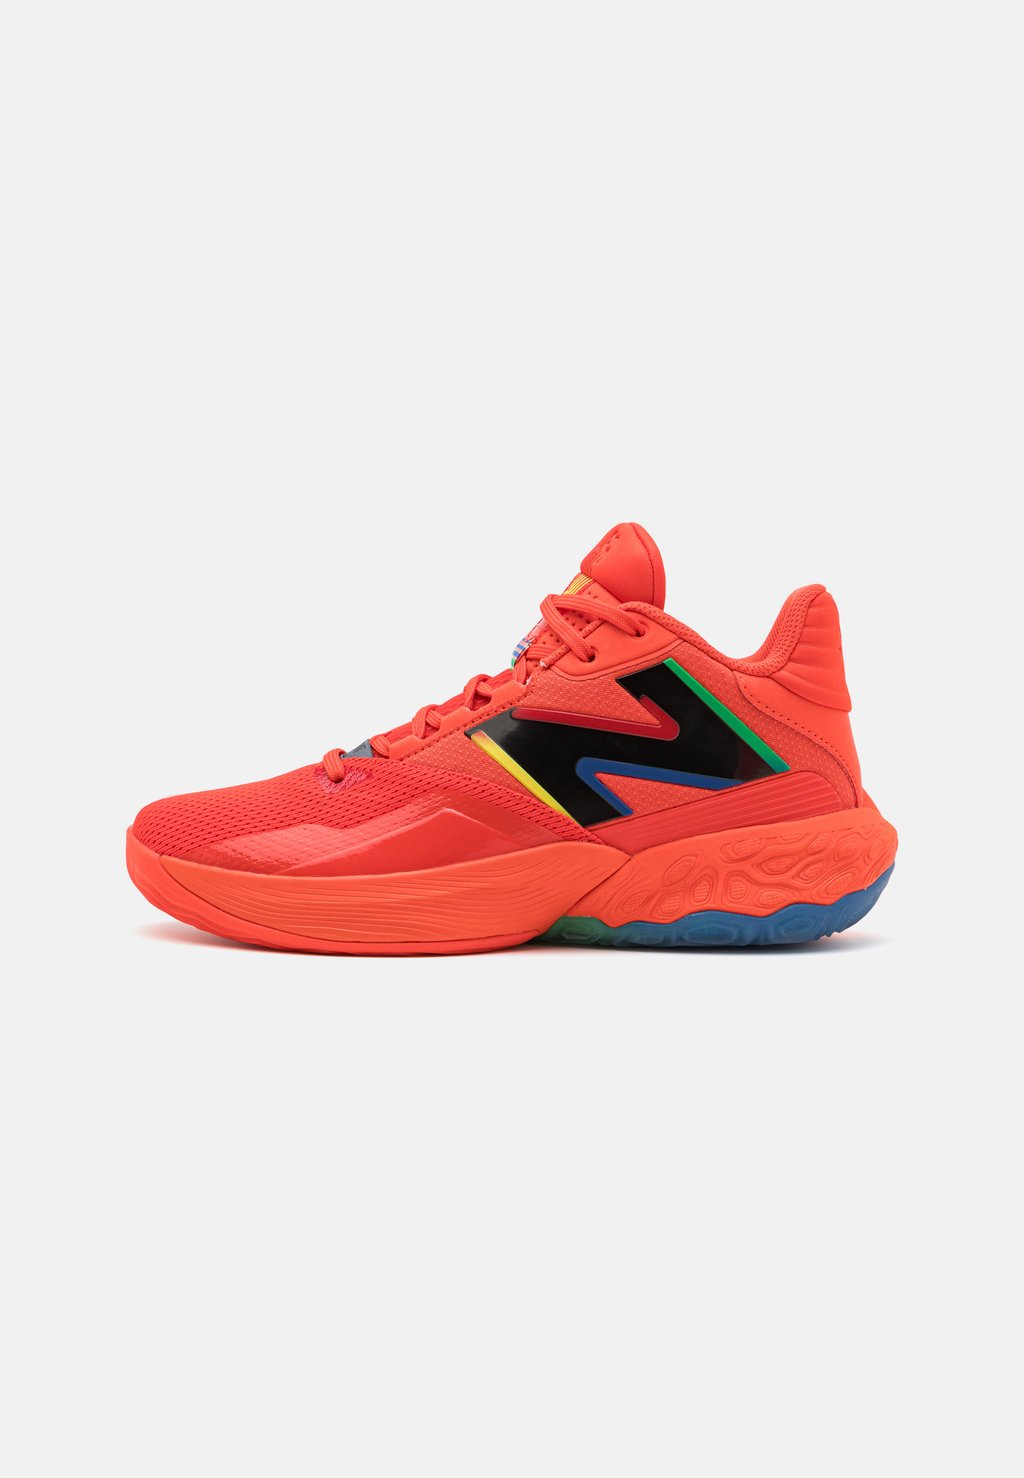 Баскетбольная обувь TWO WXY V4 New Balance, цвет neo flame